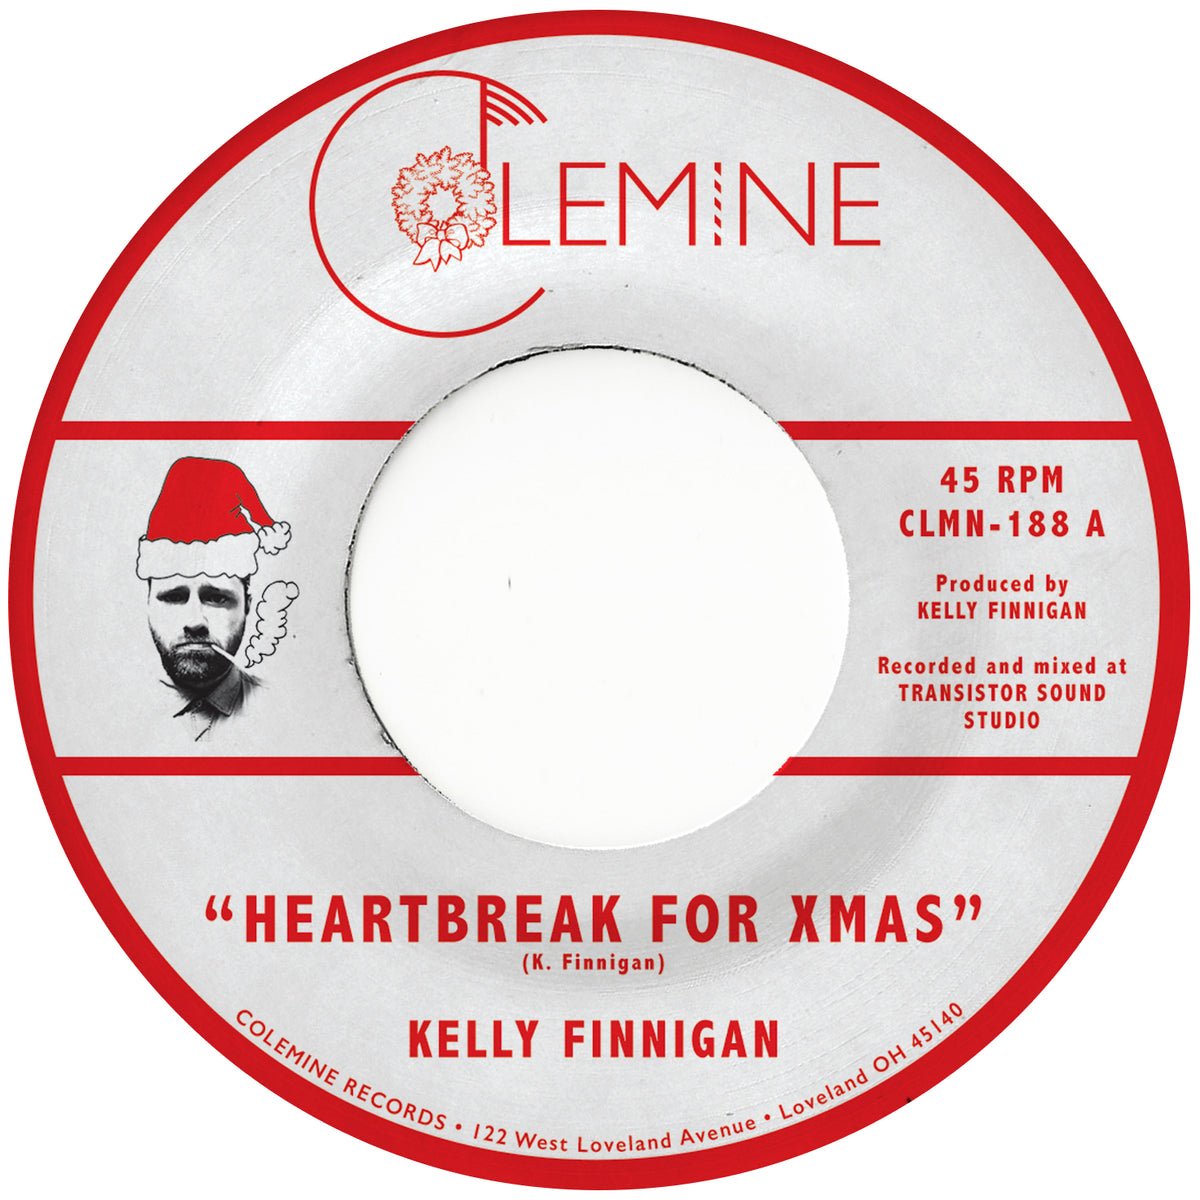 Kelly Finnigan: Heartbreak For Xmas b/w Merry Christmas To You: Green Vinyl 7" - Steadfast Records